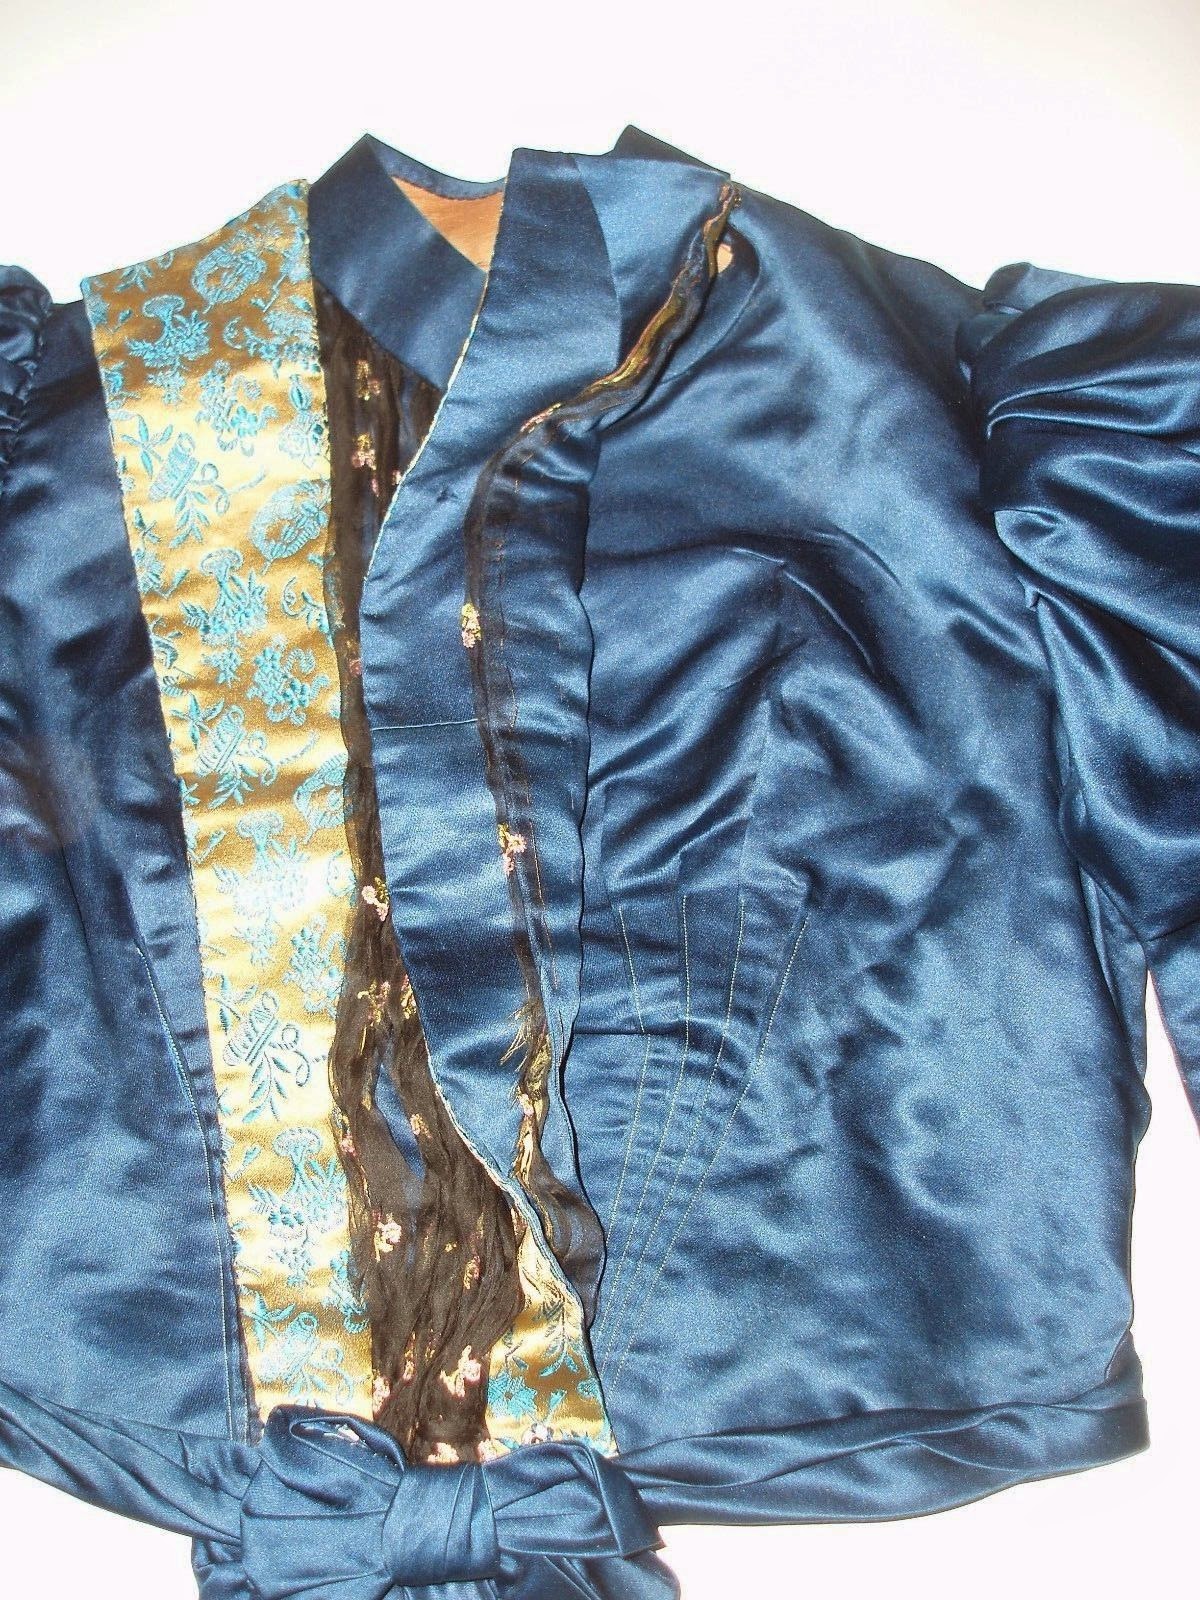 All The Pretty Dresses: Late 1890's Blue Bodice